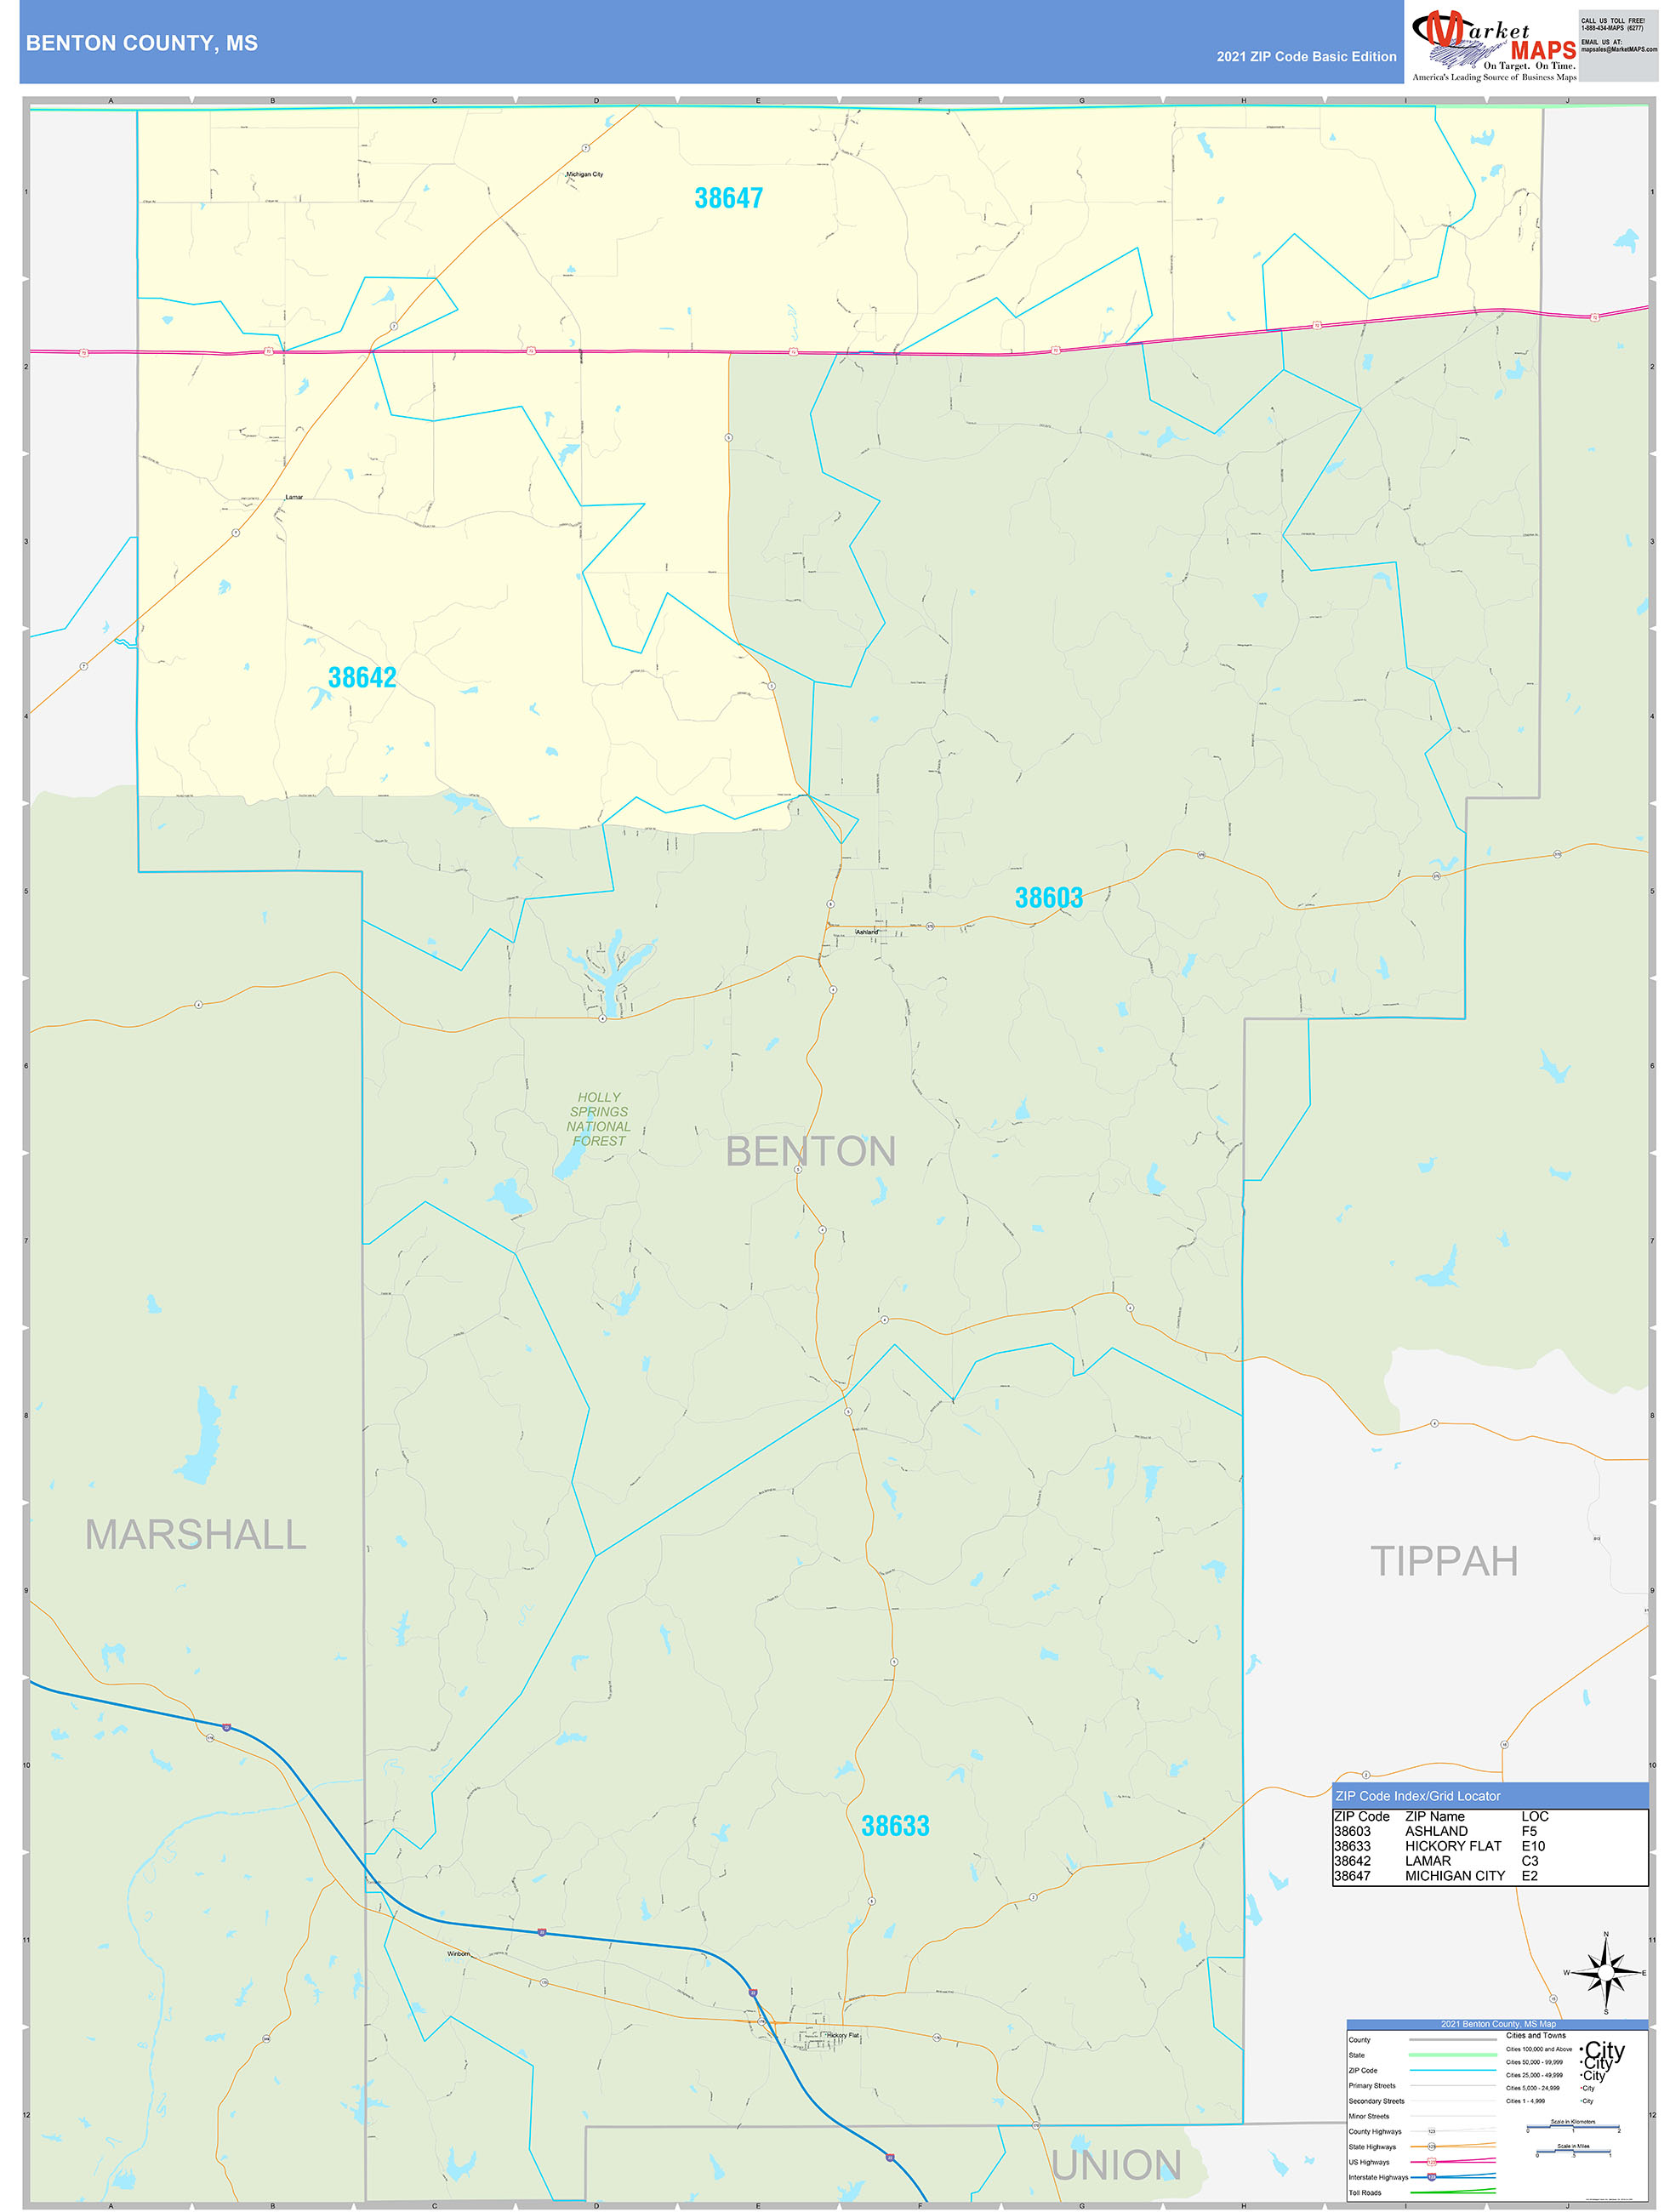 Benton County, MS Zip Code Wall Map Basic Style by MarketMAPS